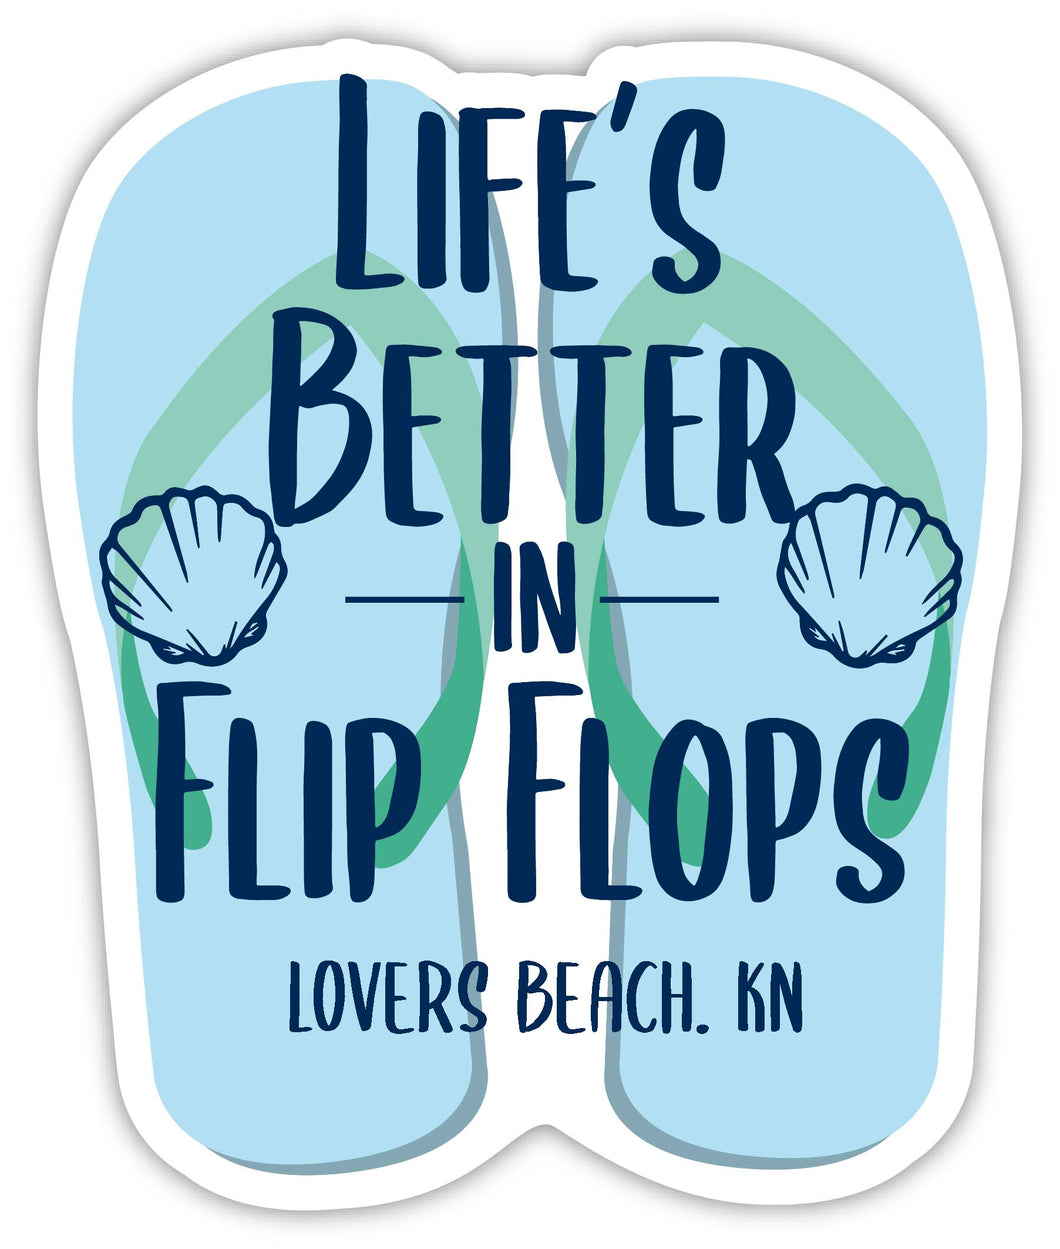 Lovers Beach St. Kitts & Nevis Souvenir 4 Inch Vinyl Decal Sticker Flip Flop Design